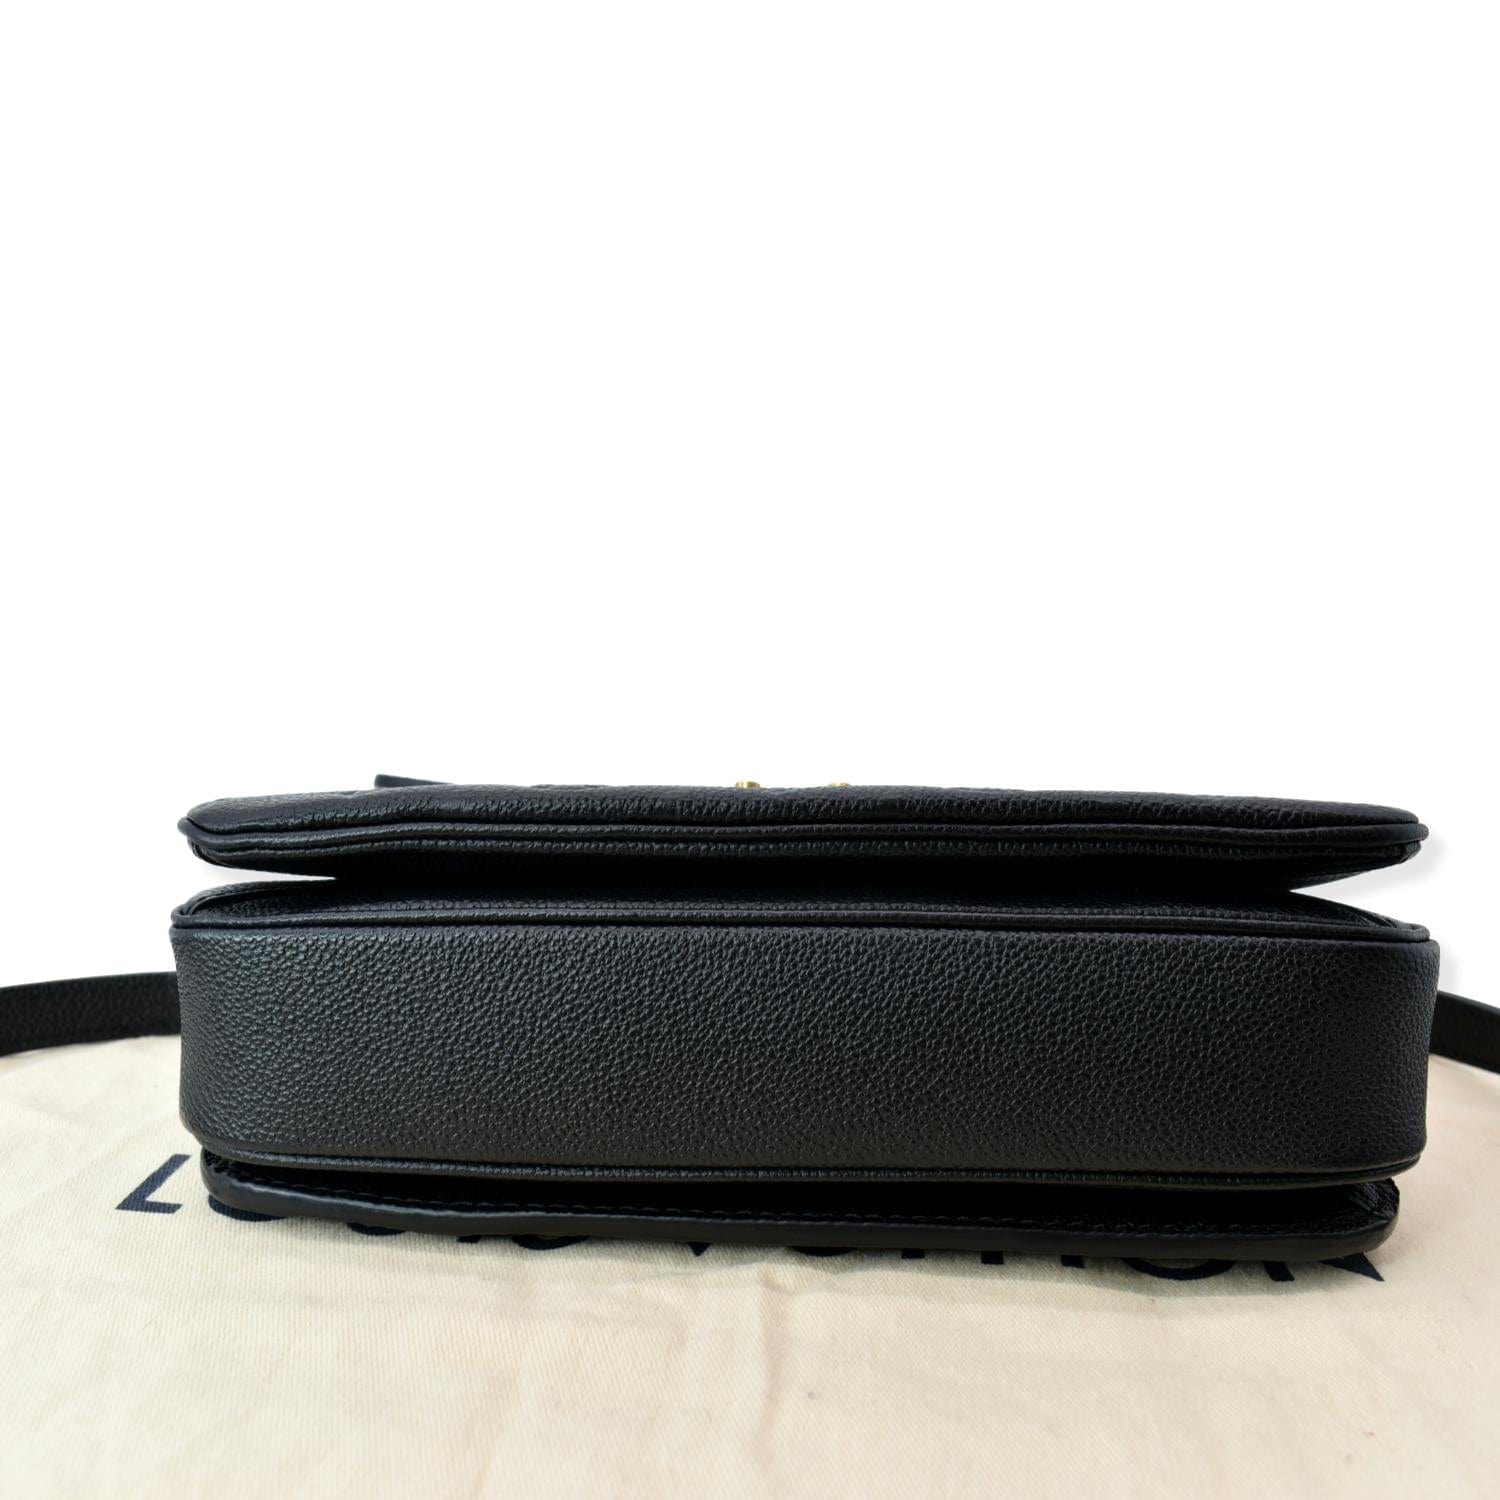 Pochette trunk leather handbag Louis Vuitton Black in Leather - 30397352